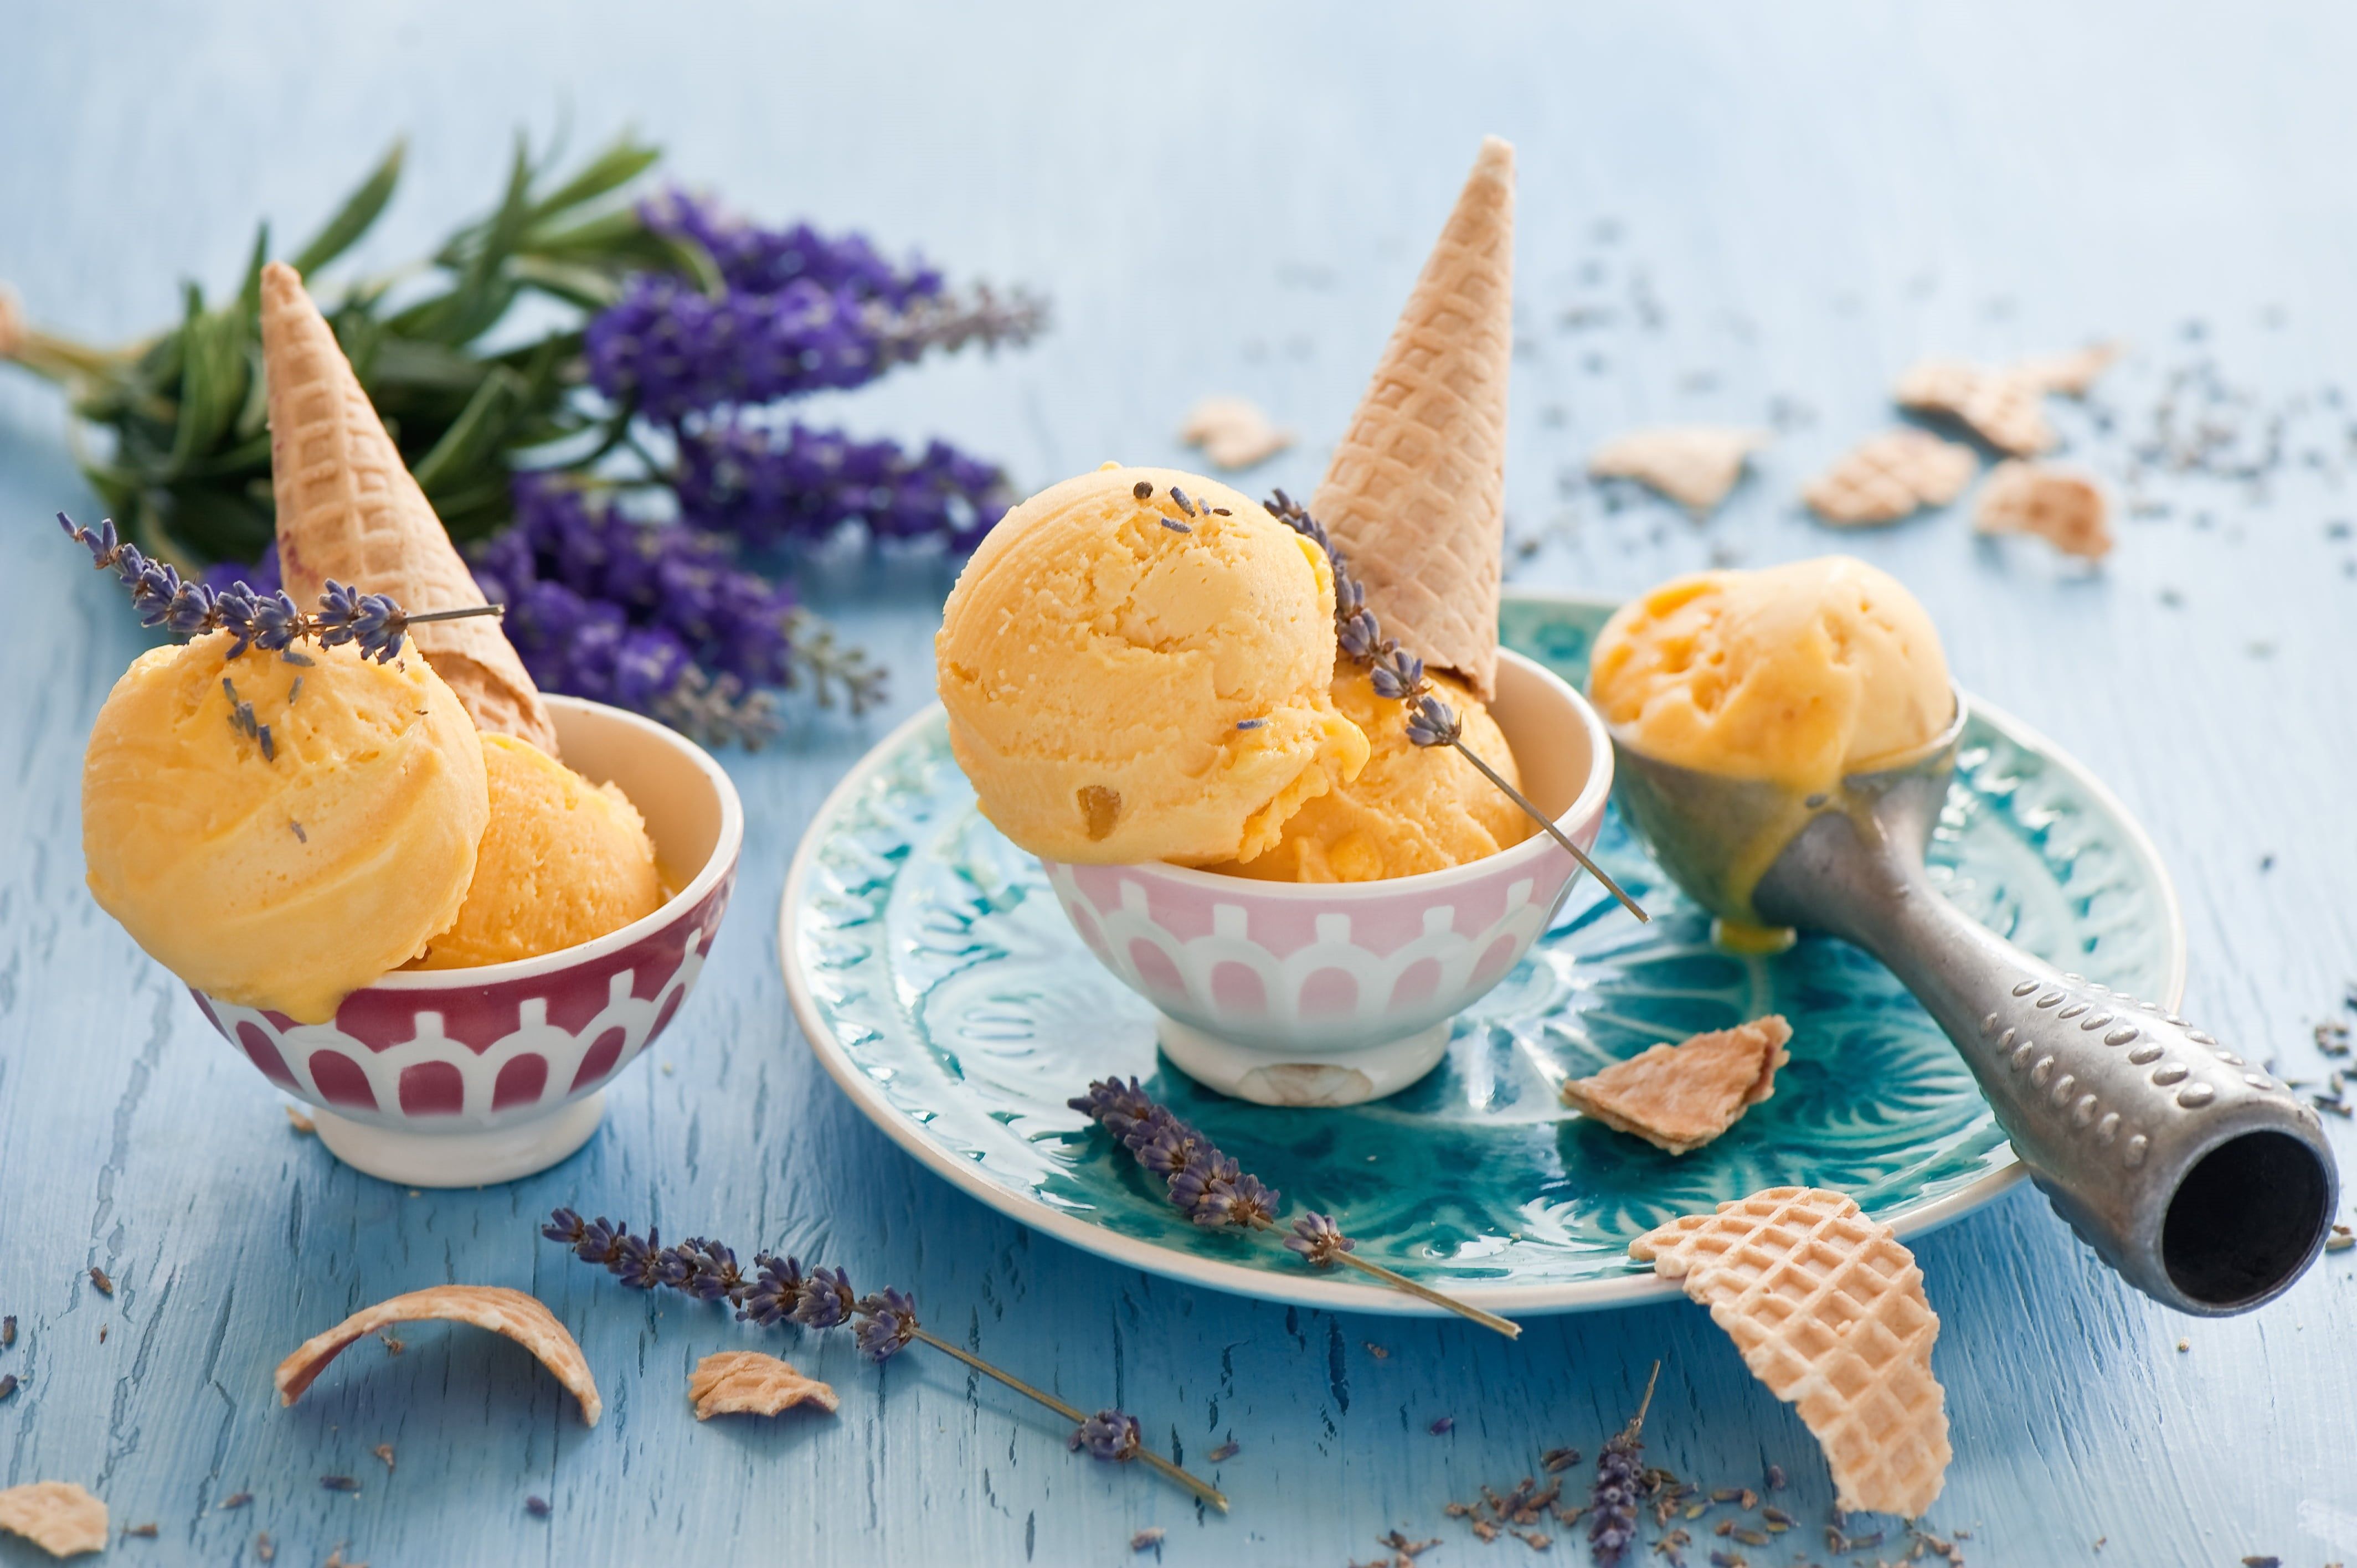 A few scoops of mango ice cream in bowls with cones - Ice cream